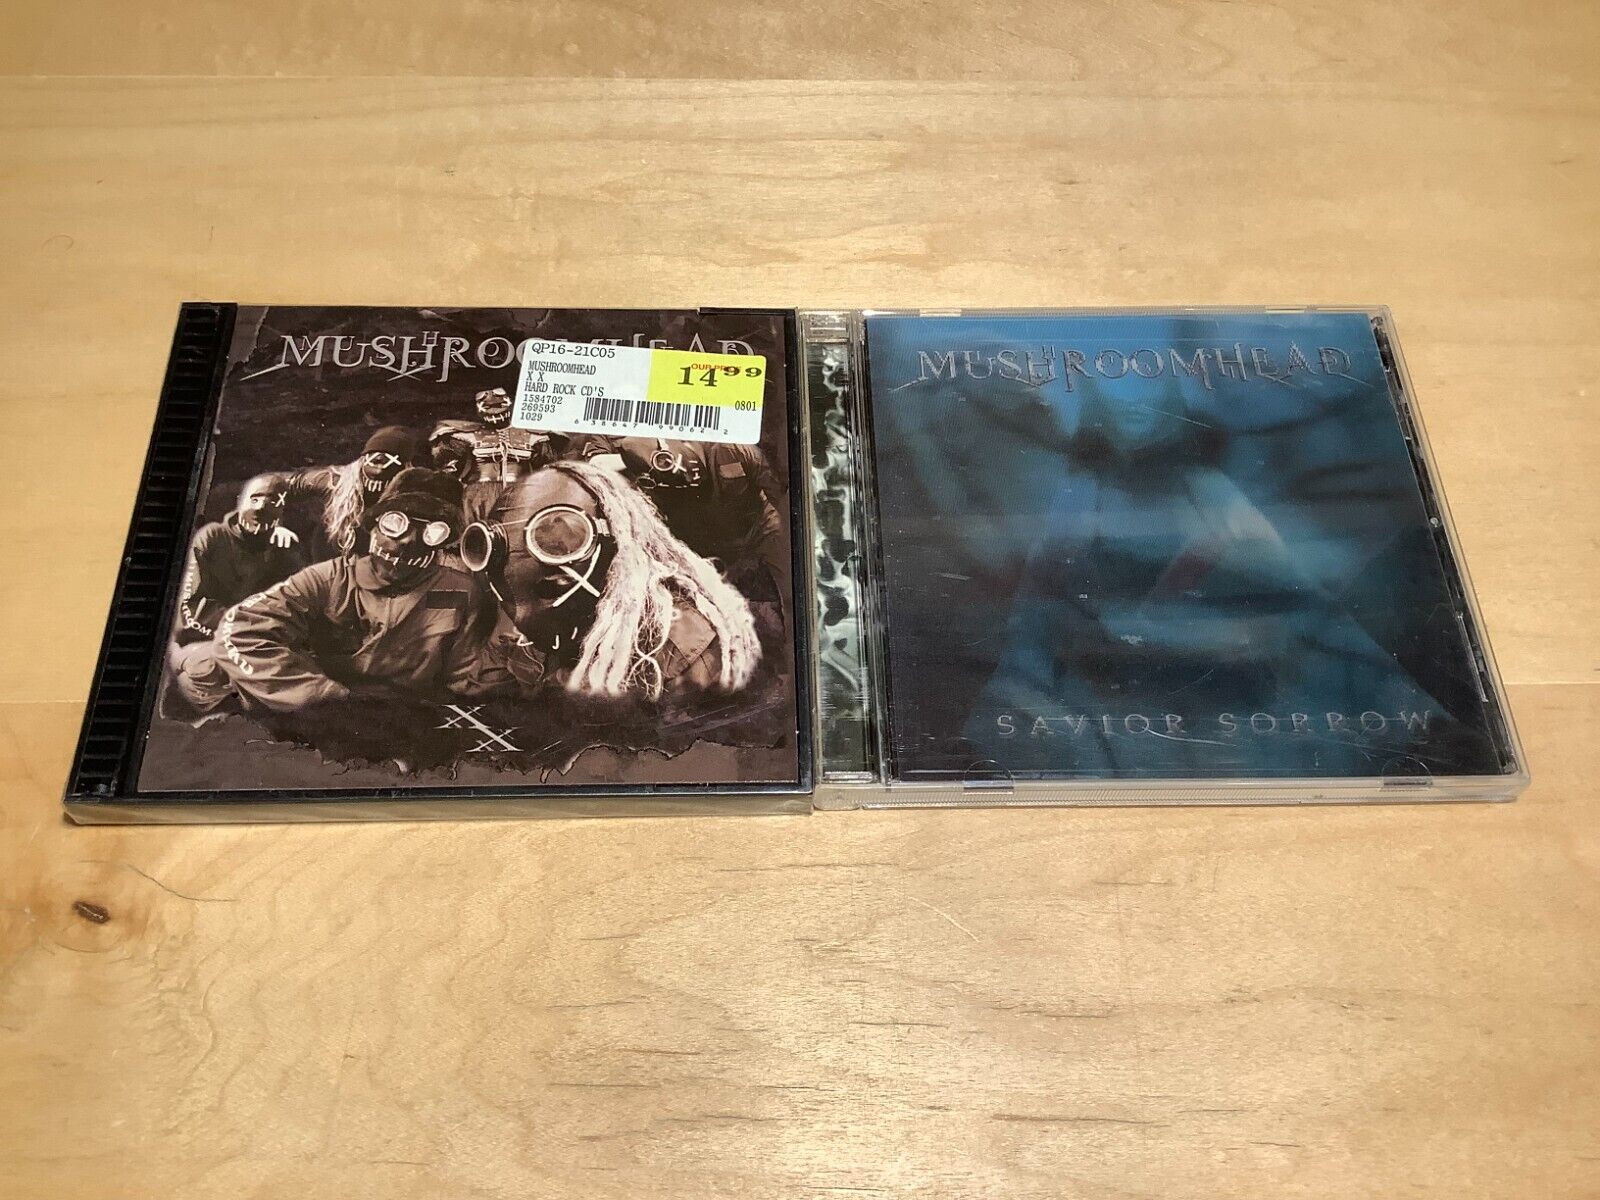 MUSHROOMHEAD 2 CD Lot - Savior Sorrow - XX (sealed copy)